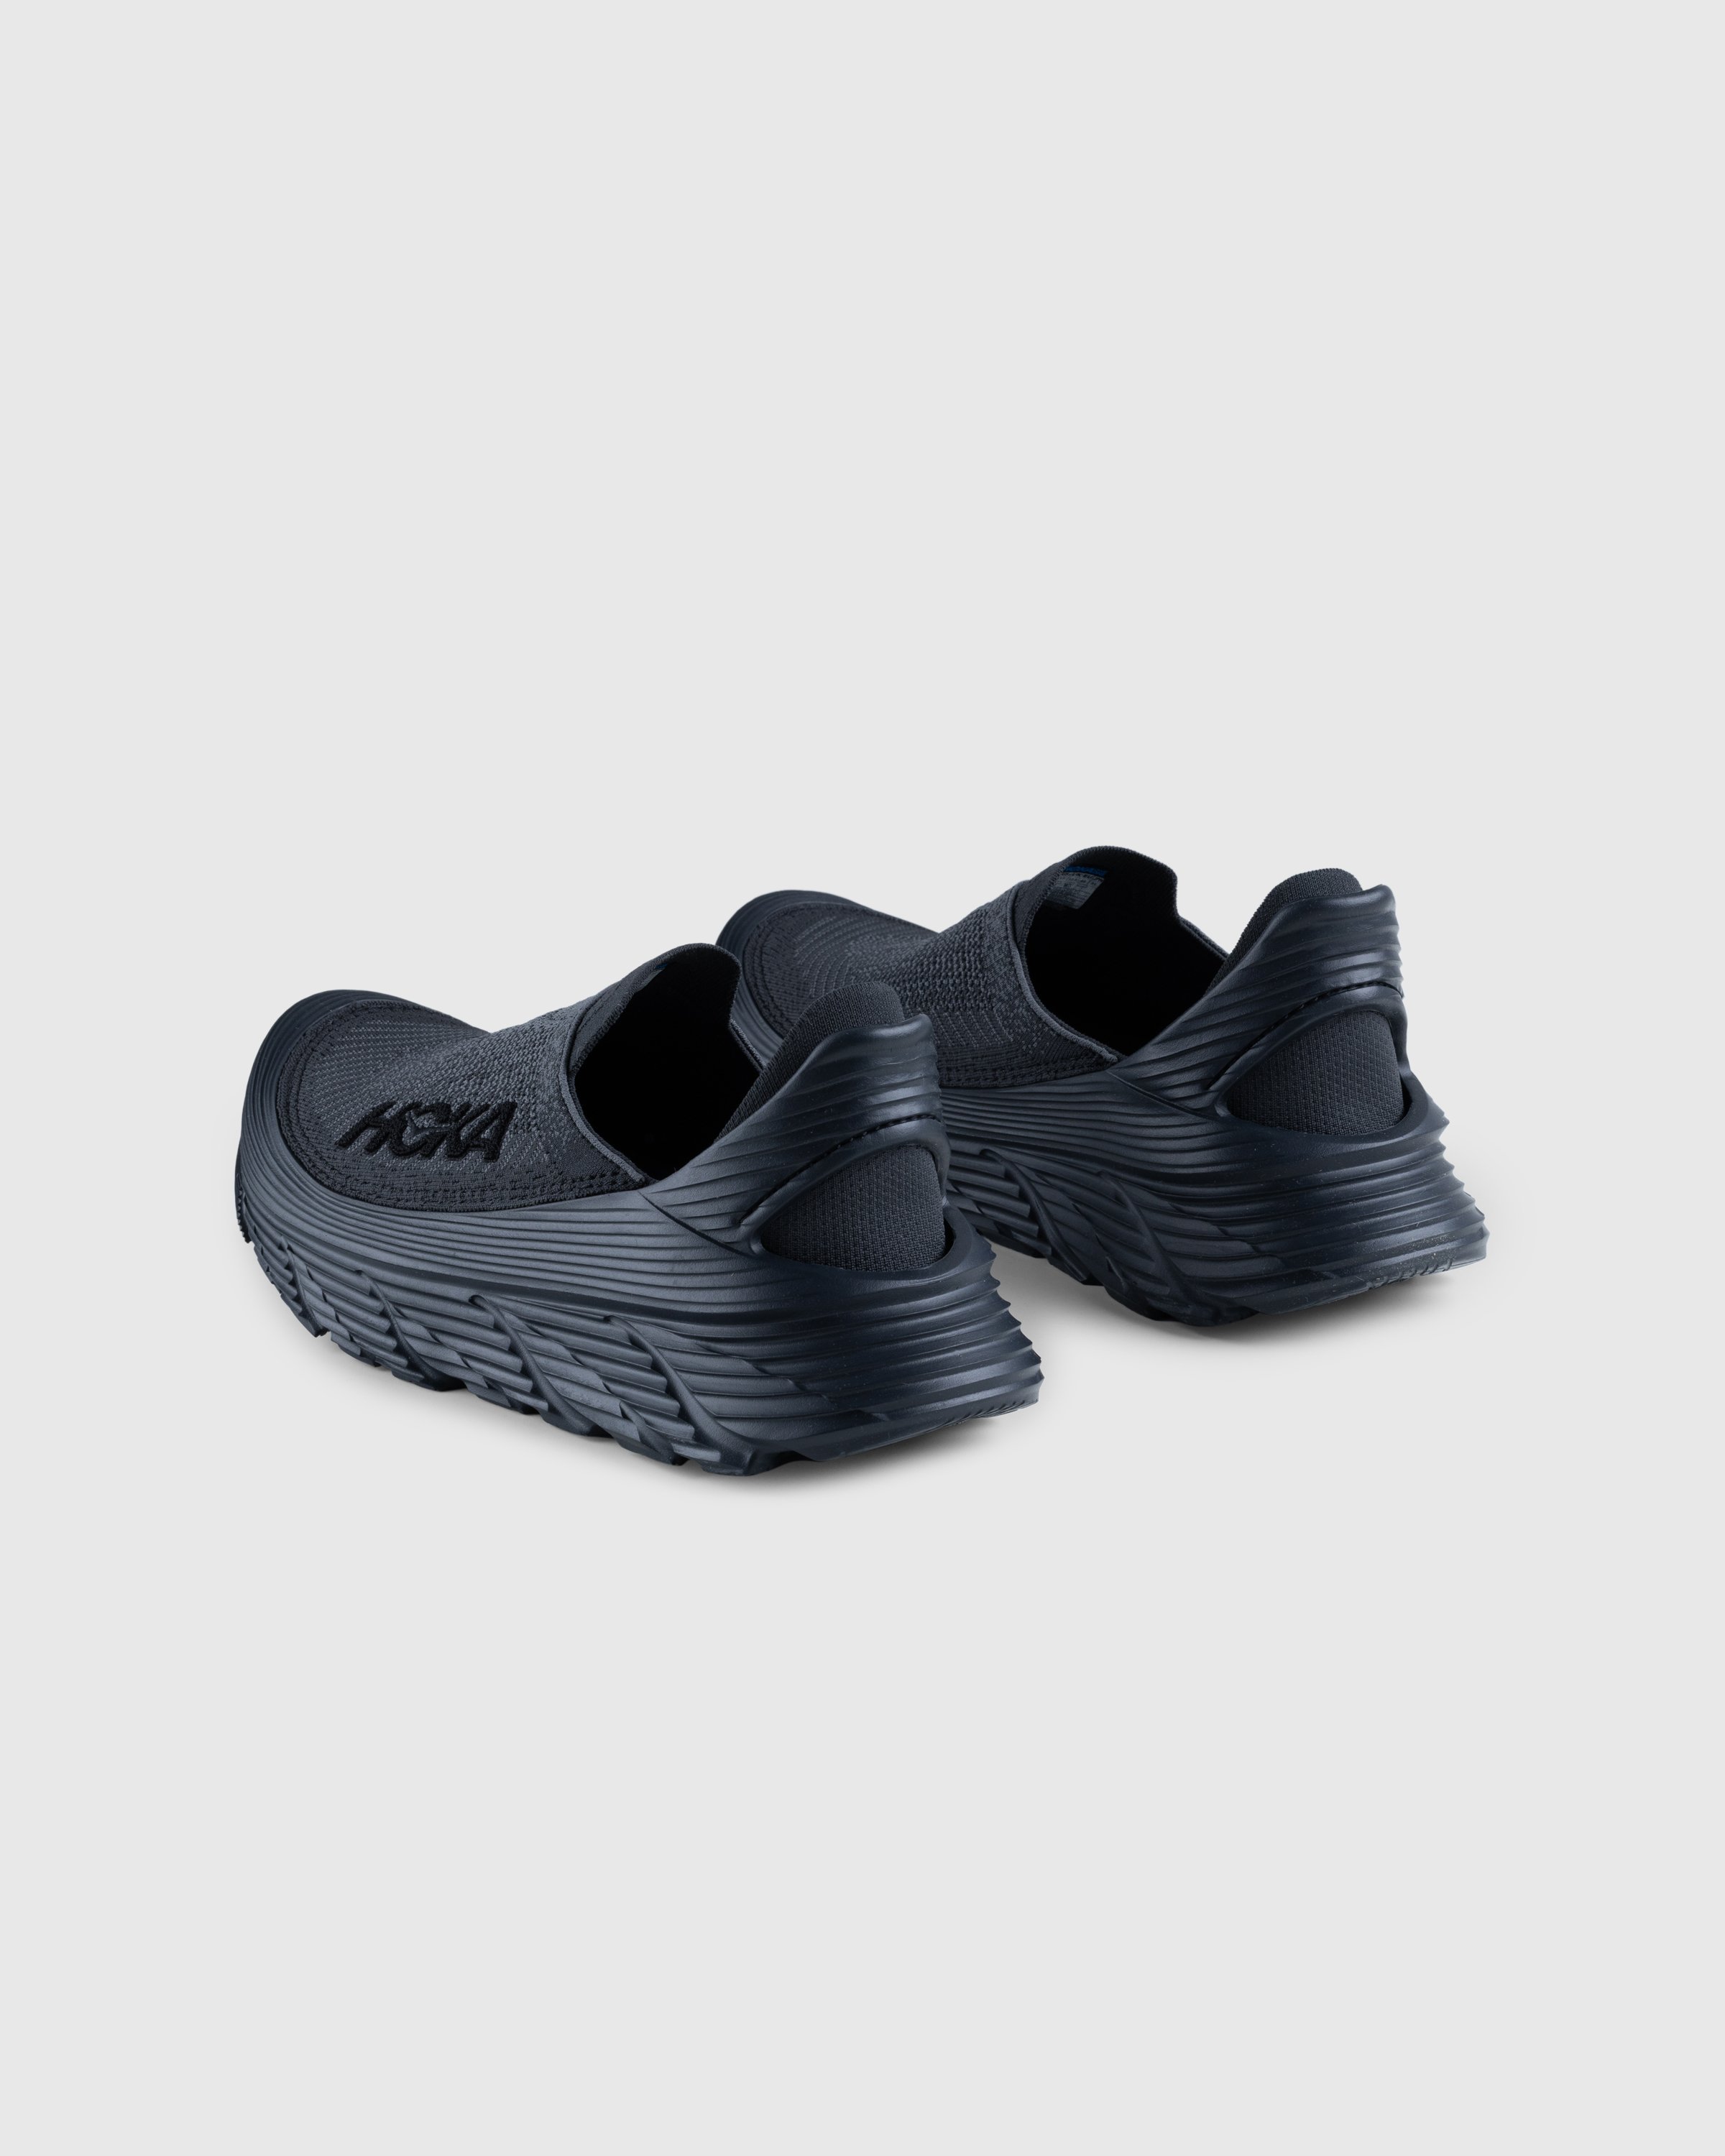 HOKA - Restore TC Black - Footwear - Black - Image 4